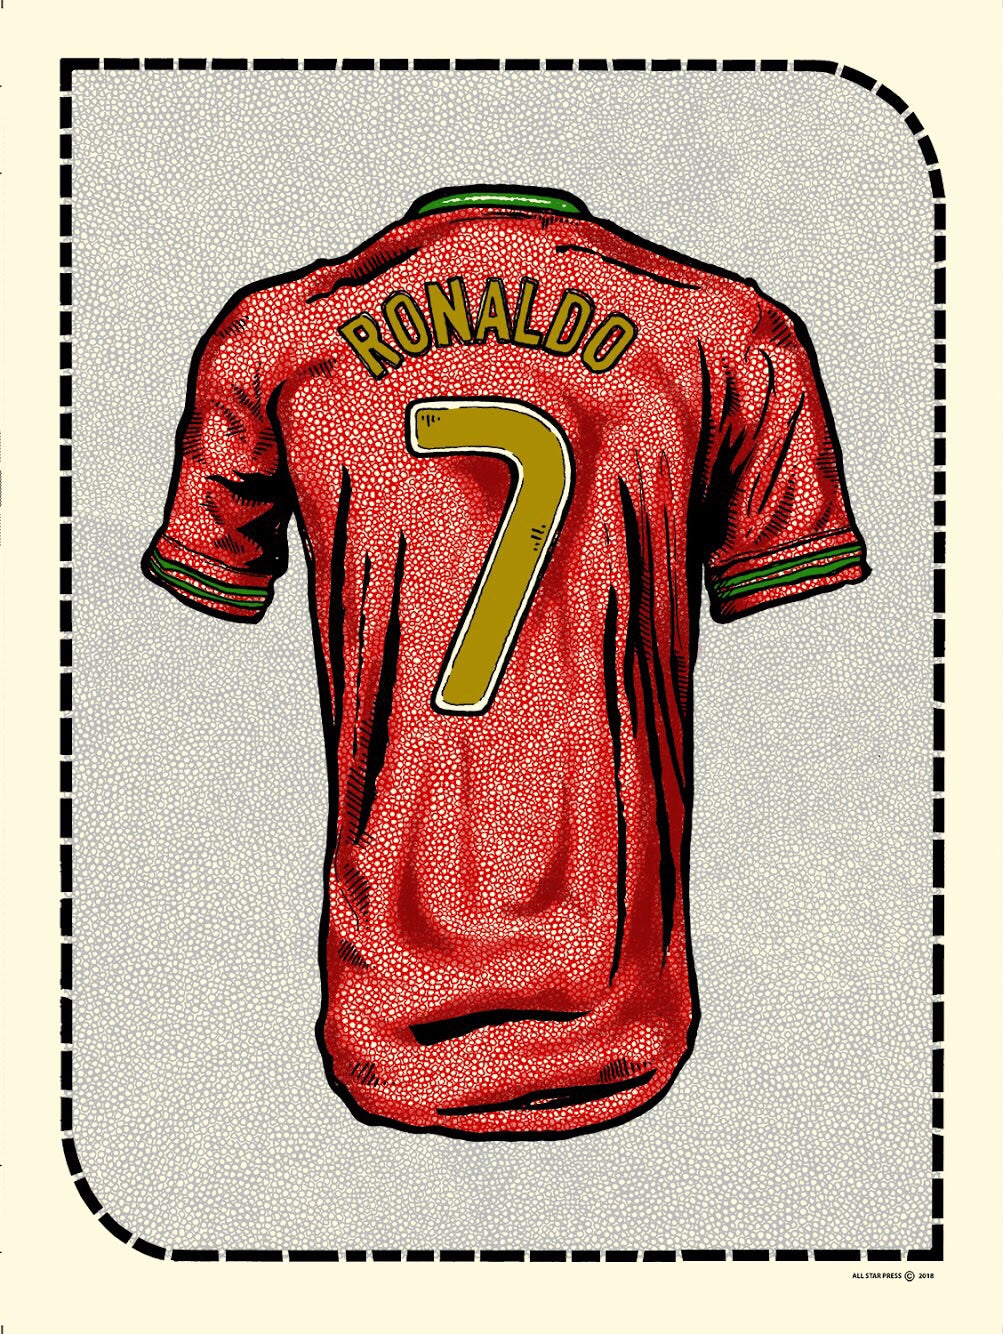 "Ronaldo - Portugal Jersey" by Zissou Tasseff-Elenkoff